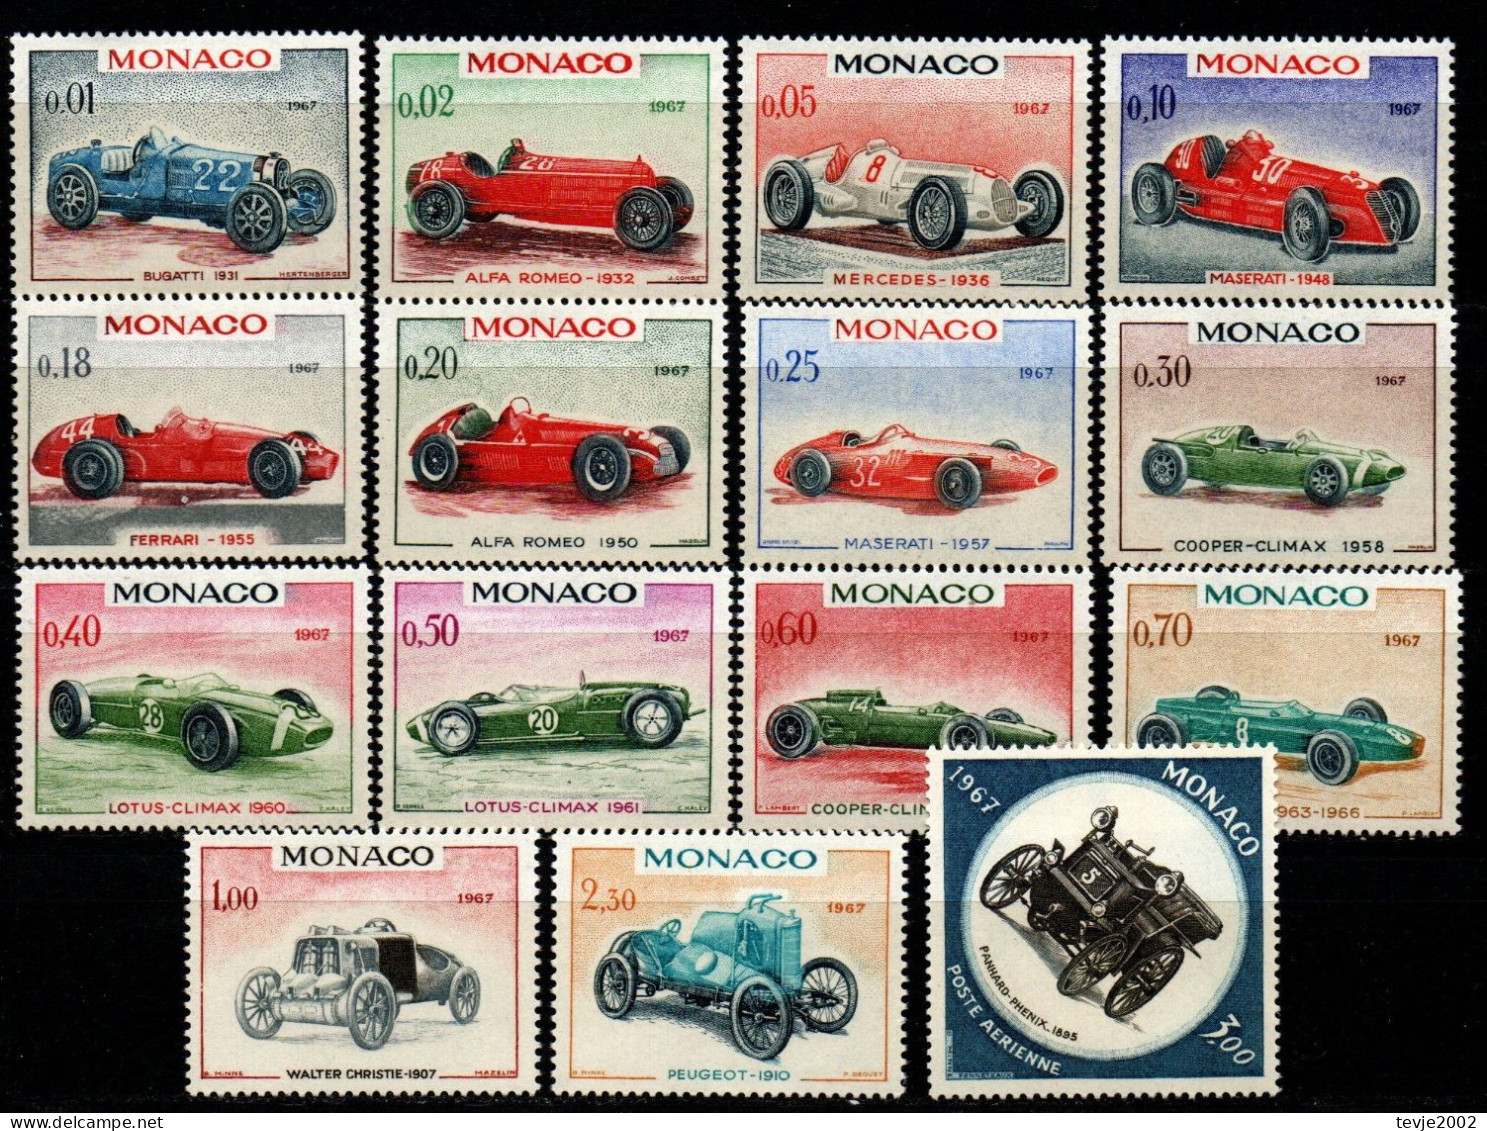 Monaco 1965 - Mi.Nr. 848 - 862 - Postfrisch MNH - Motorsport - Automobile